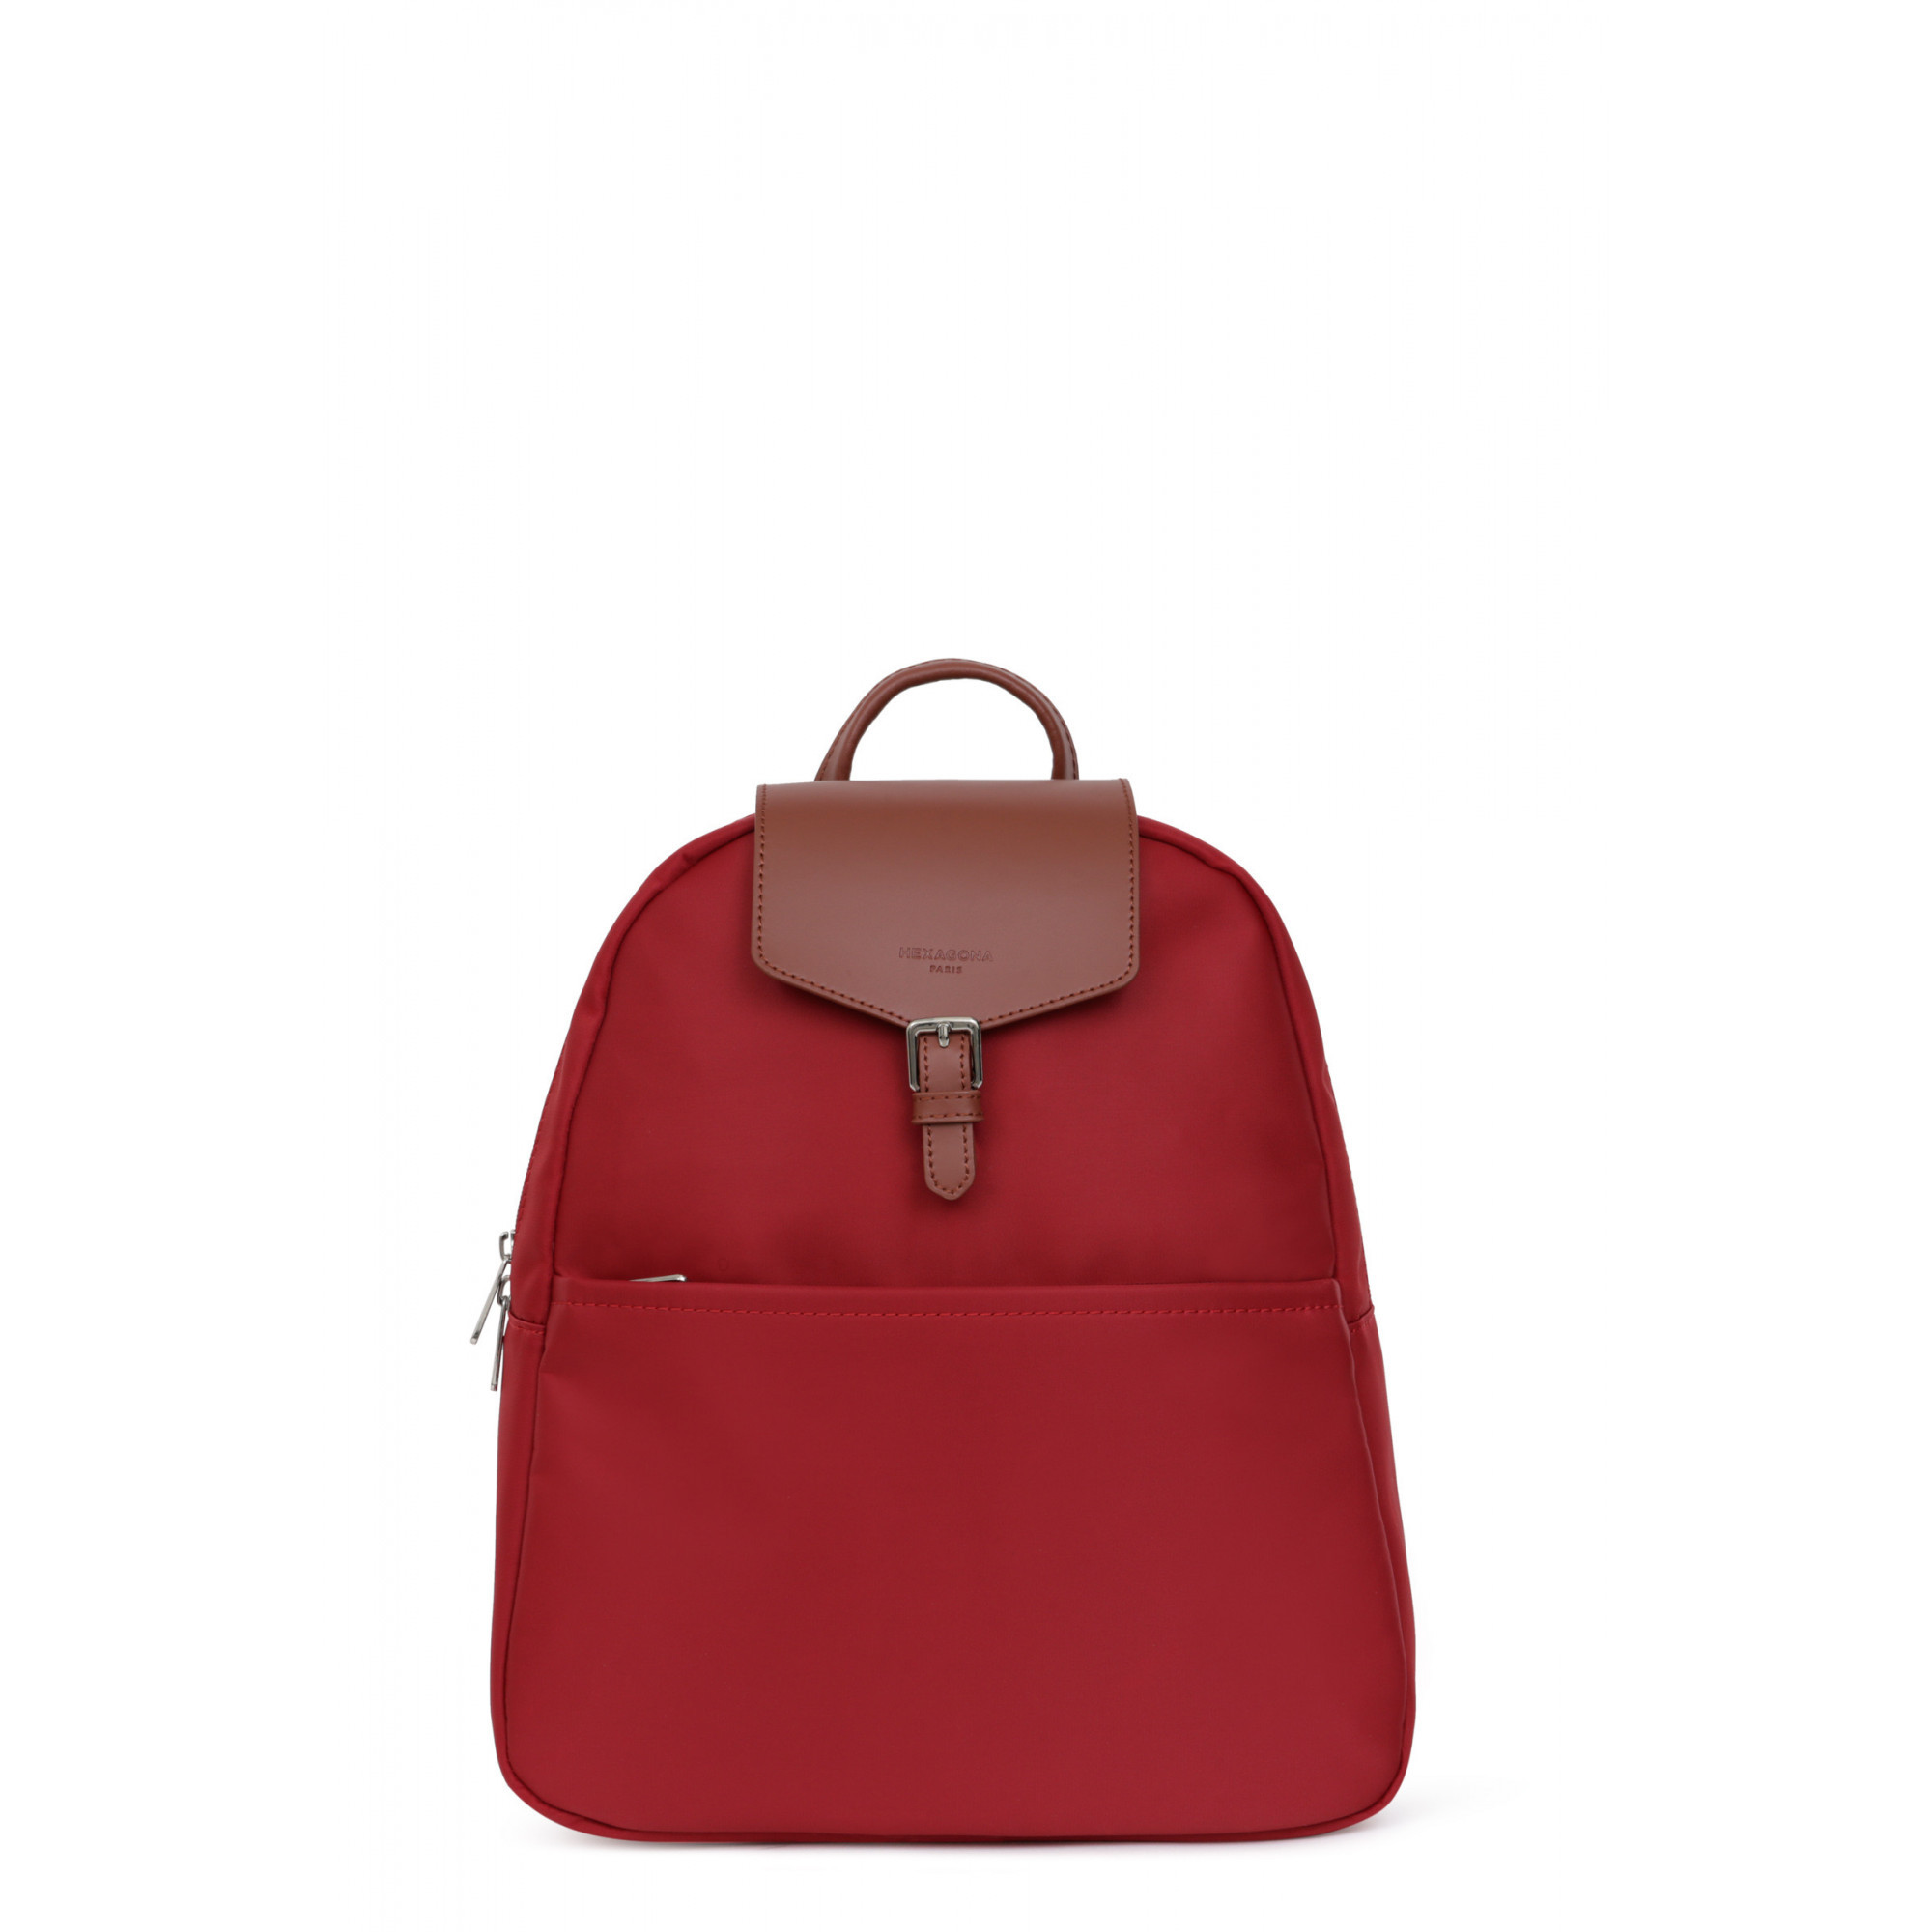 Backpack Red - HEXAGONA